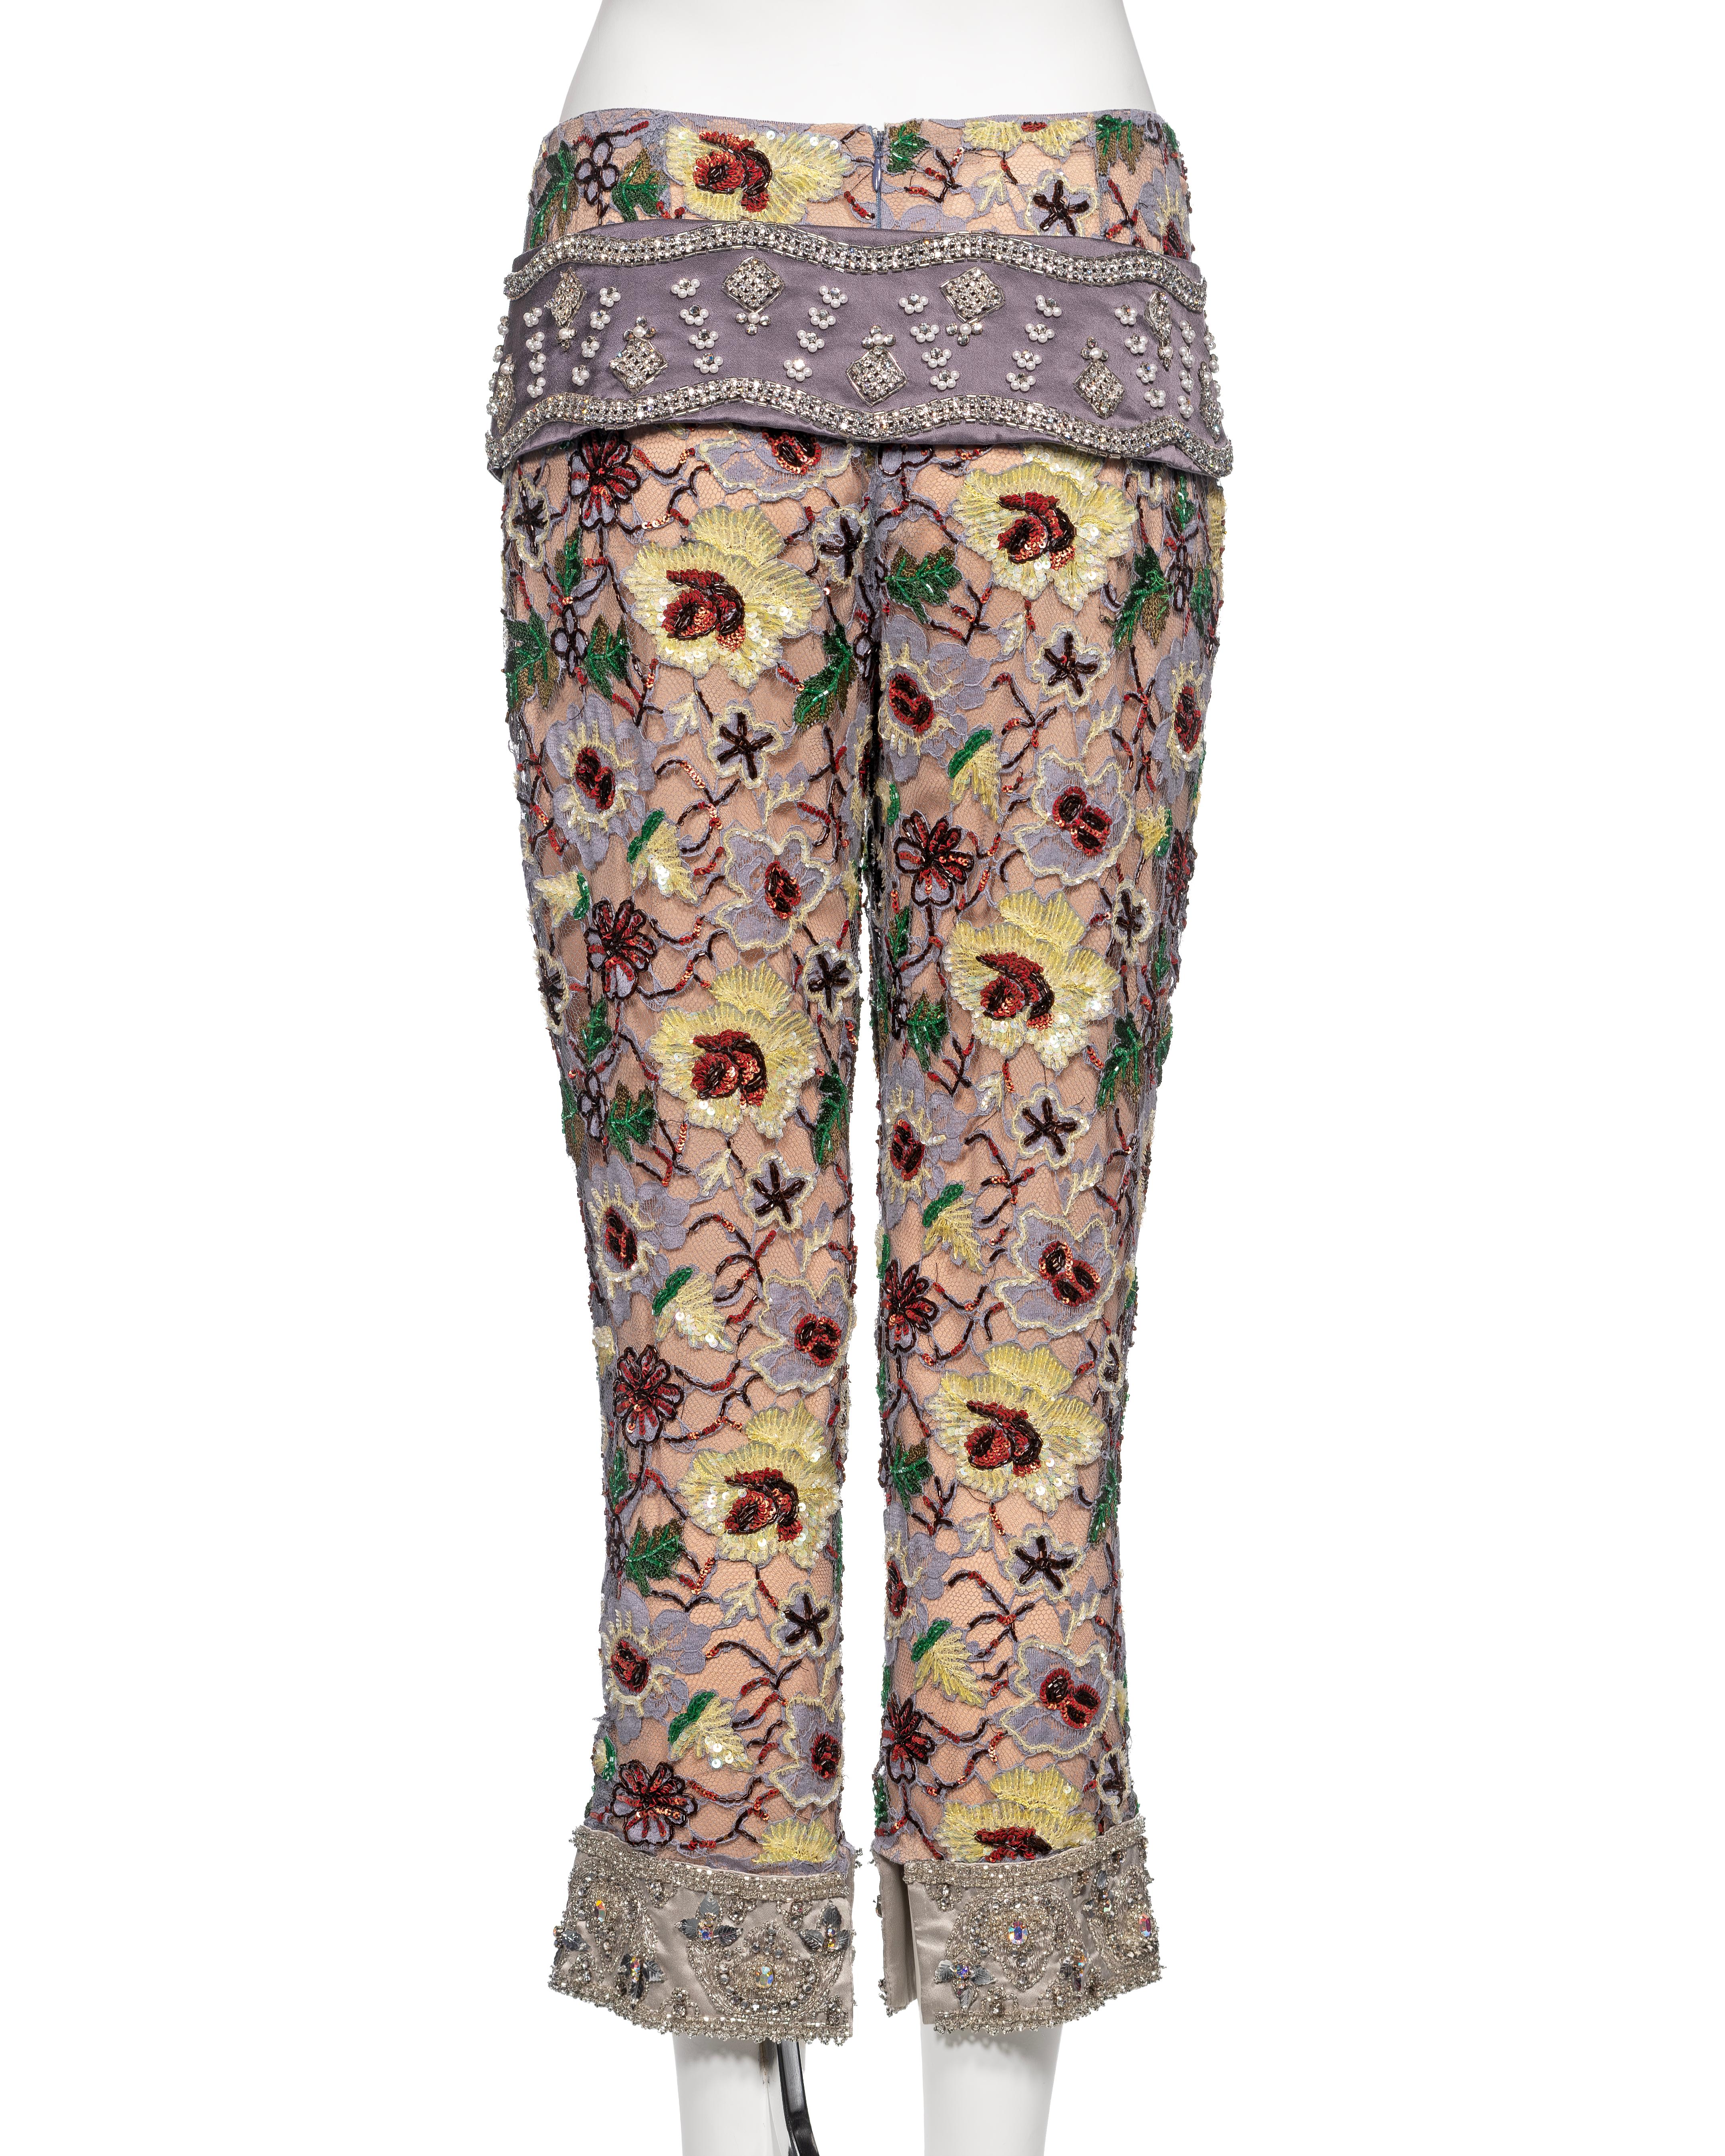 Dolce & Gabbana Embellished Lace Capri Pants and Belt Set, FW 1999 For Sale 6